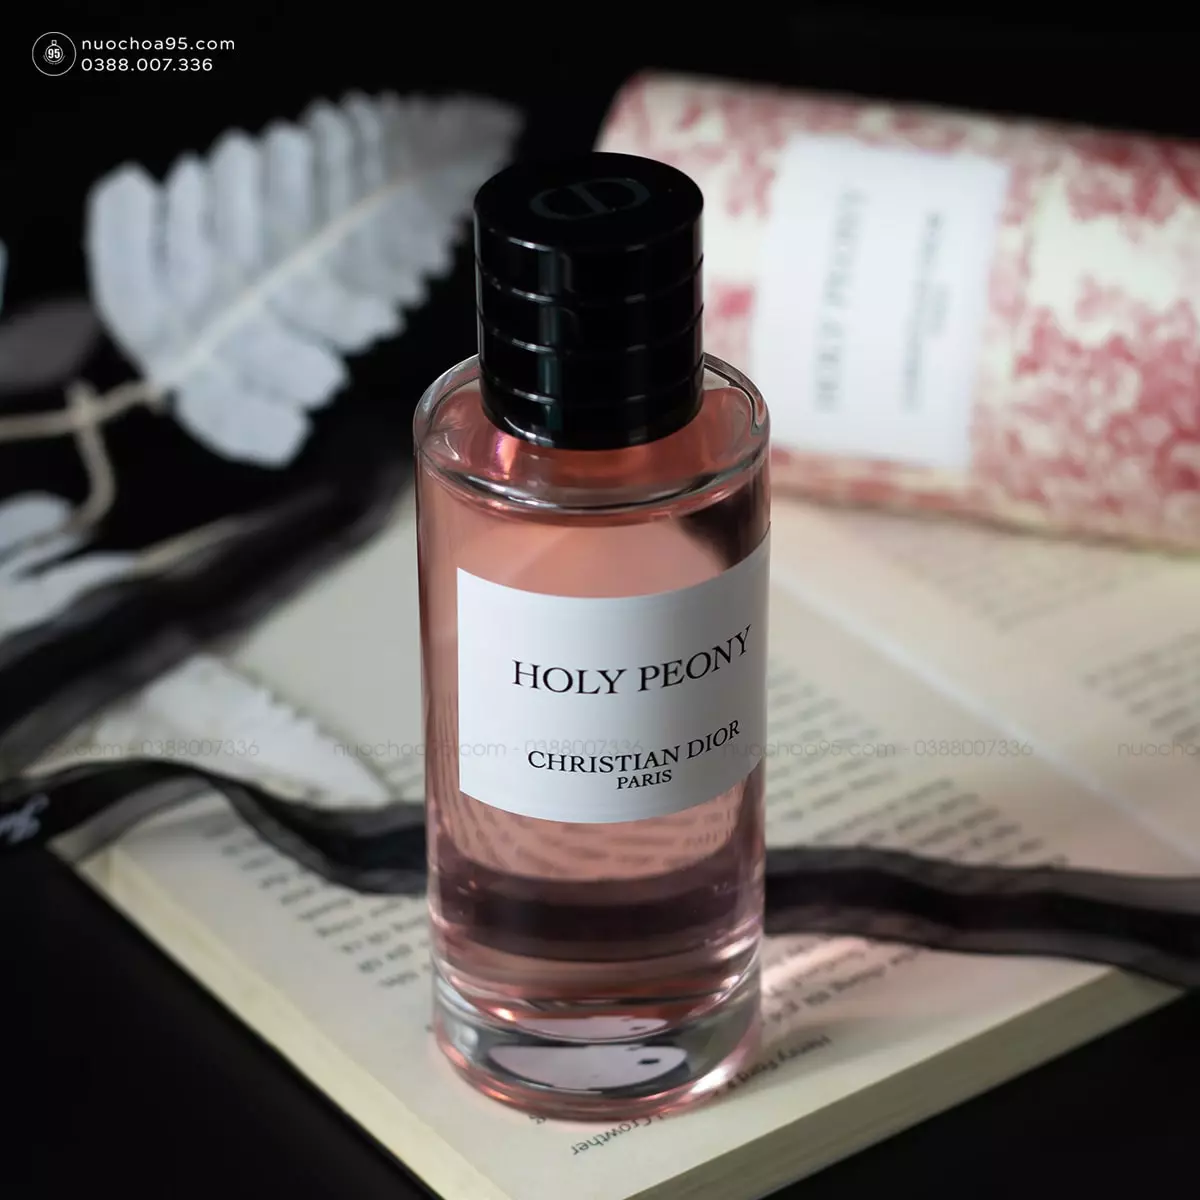 Nước hoa Dior Holy Peony Limited Edition - Ảnh 1